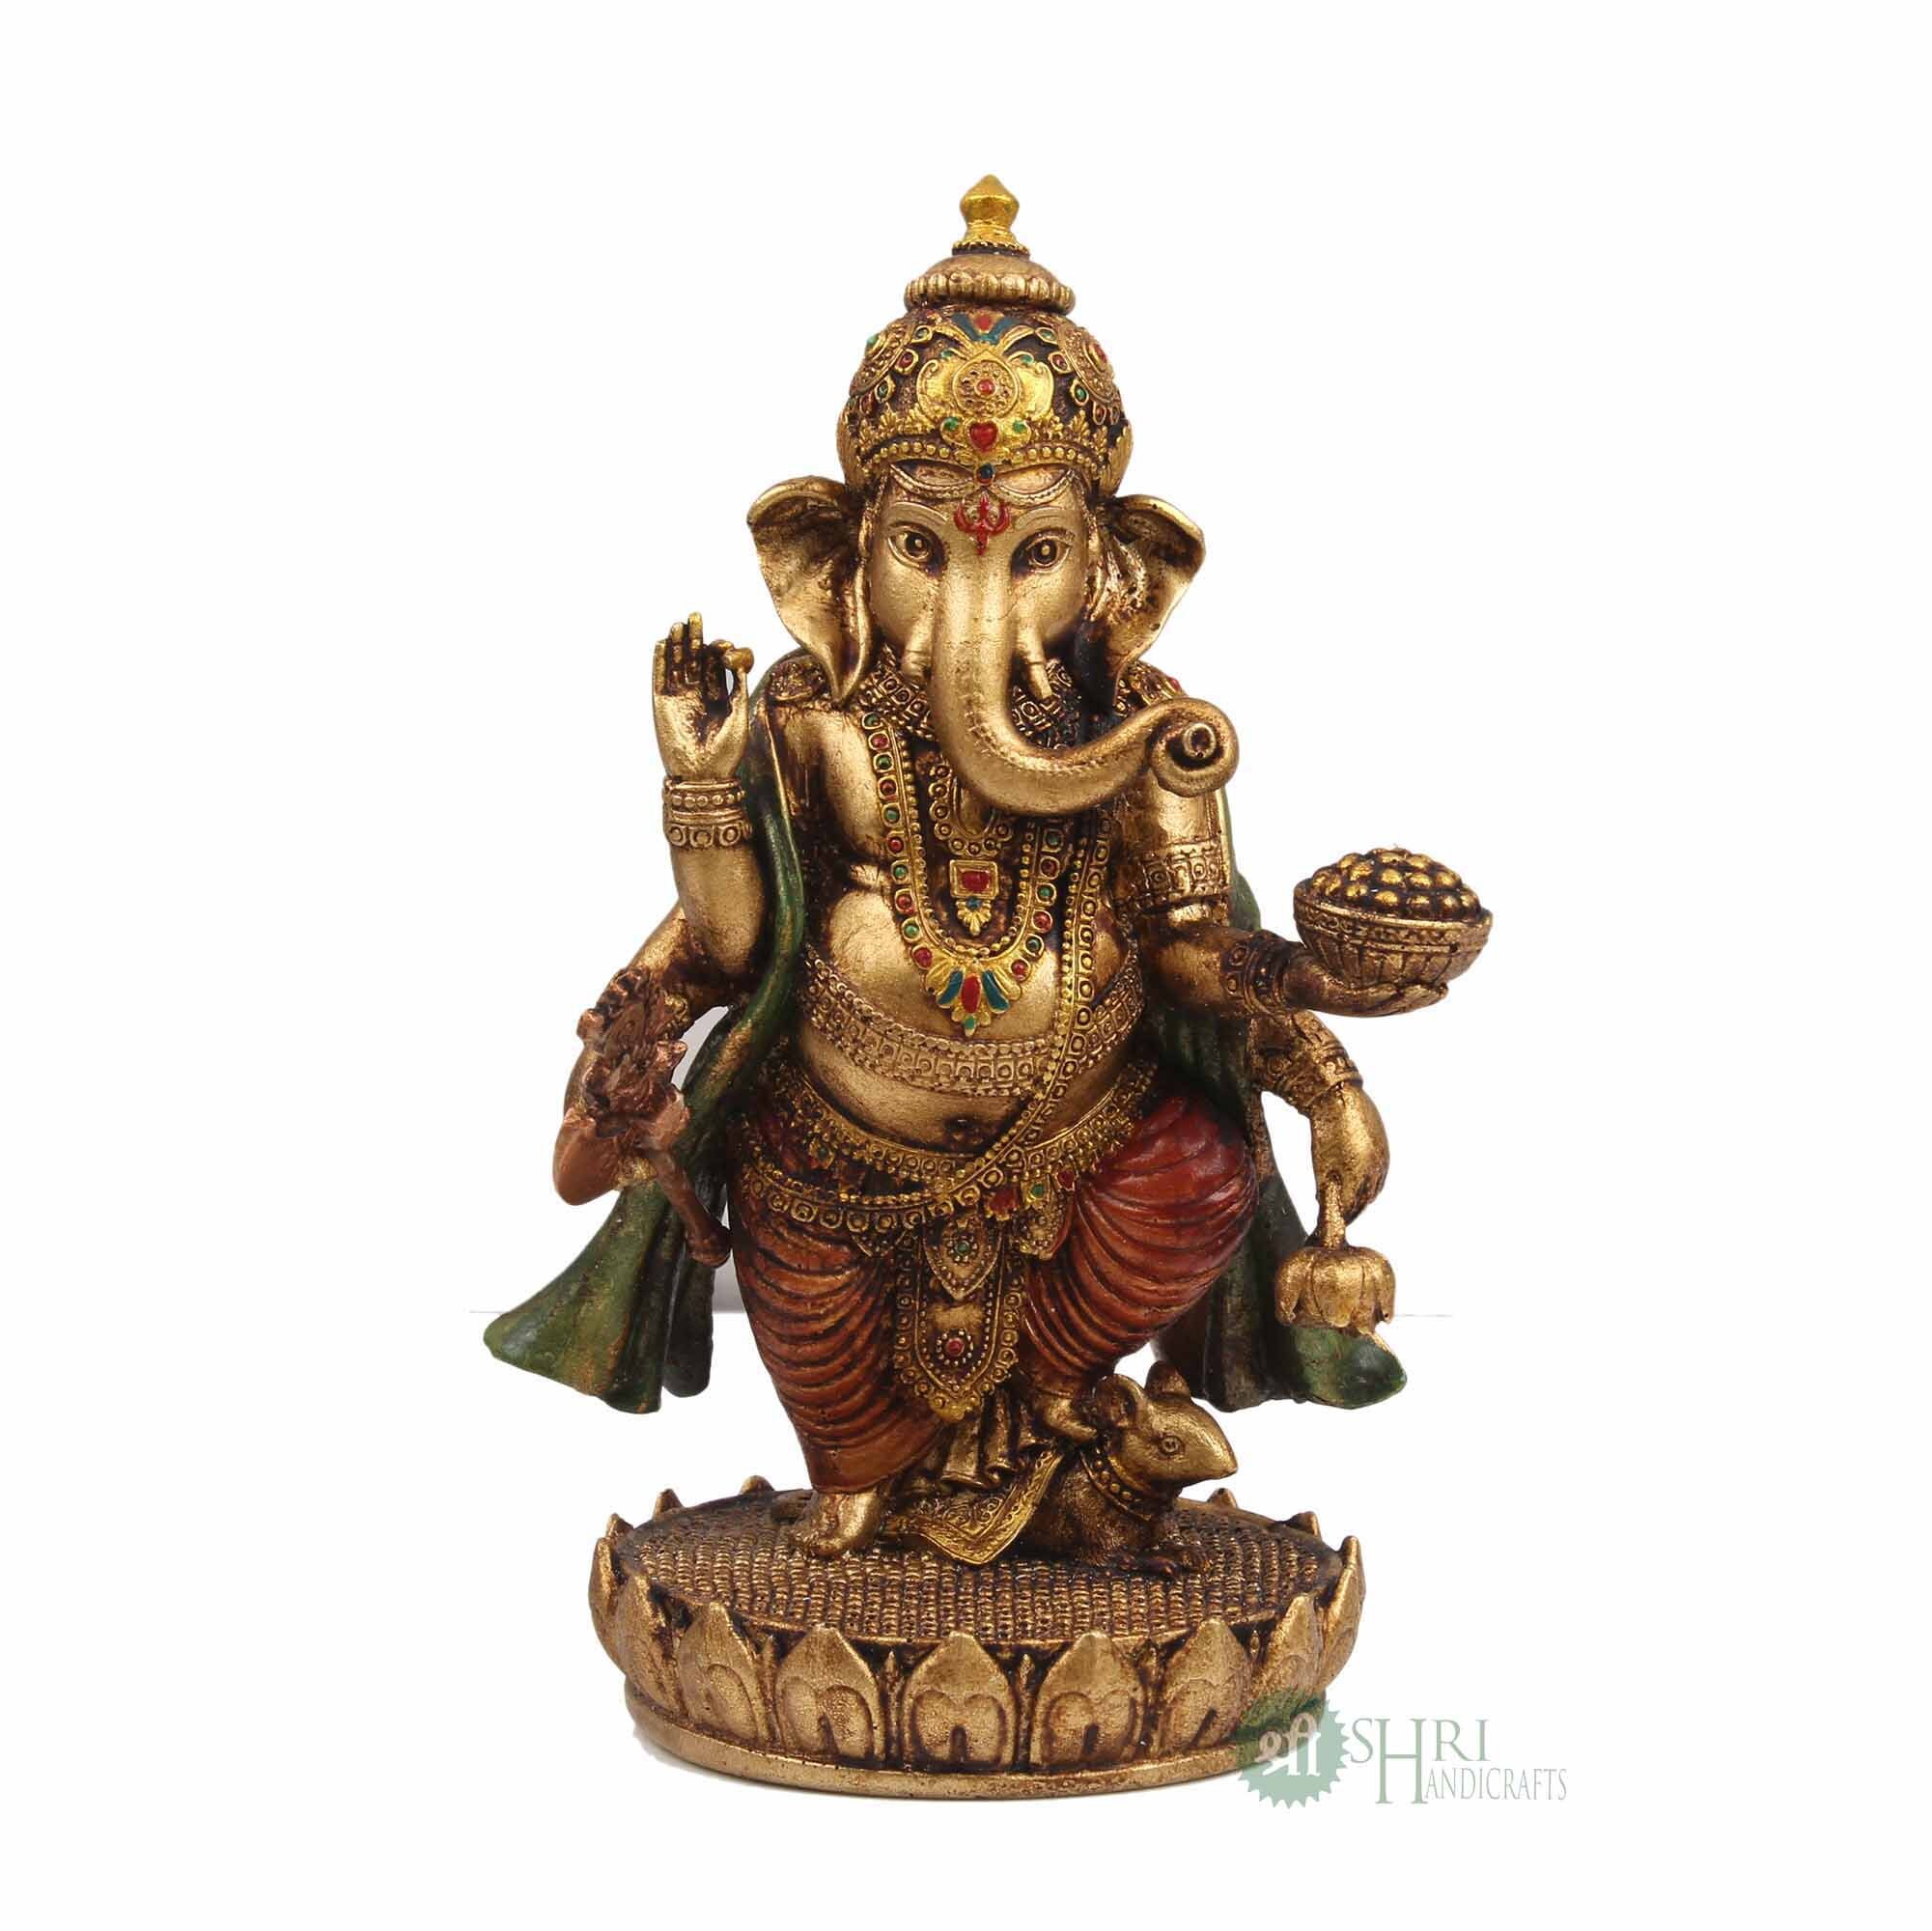 Lord Ganesha standing Ganesh Statue hindu Elephant God good | Etsy India